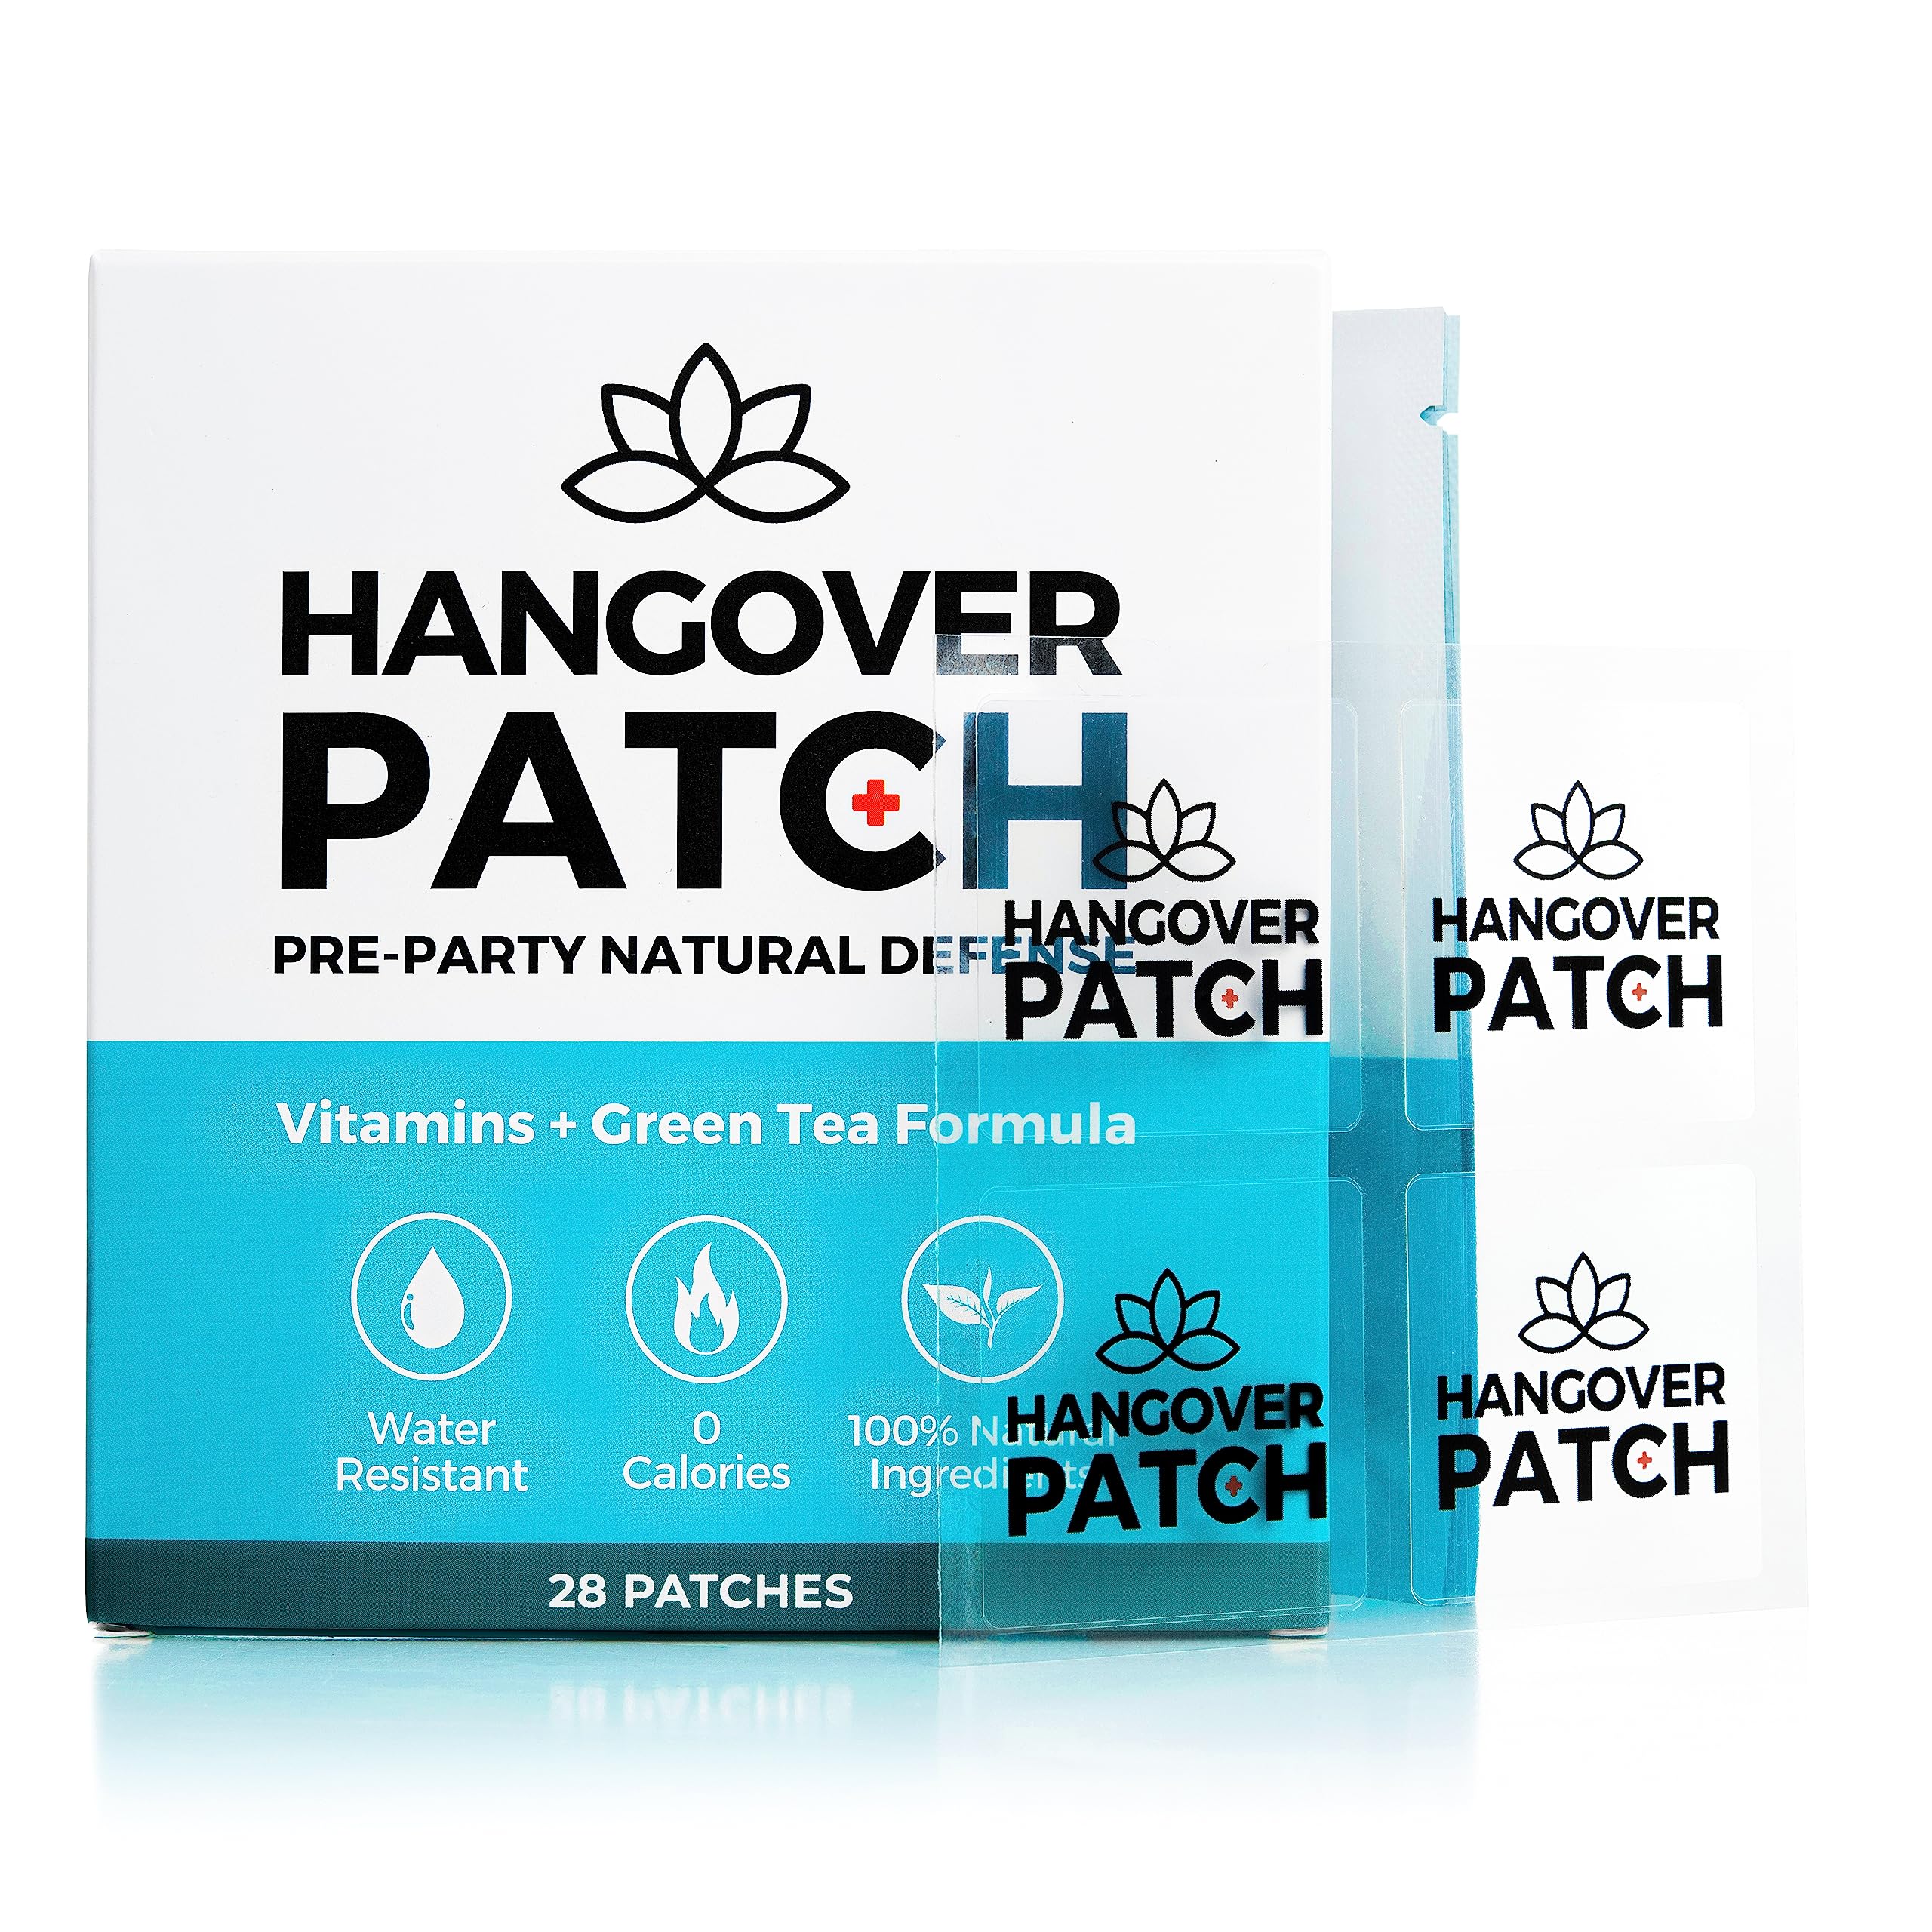 healthcare supplies party patch hangover defense